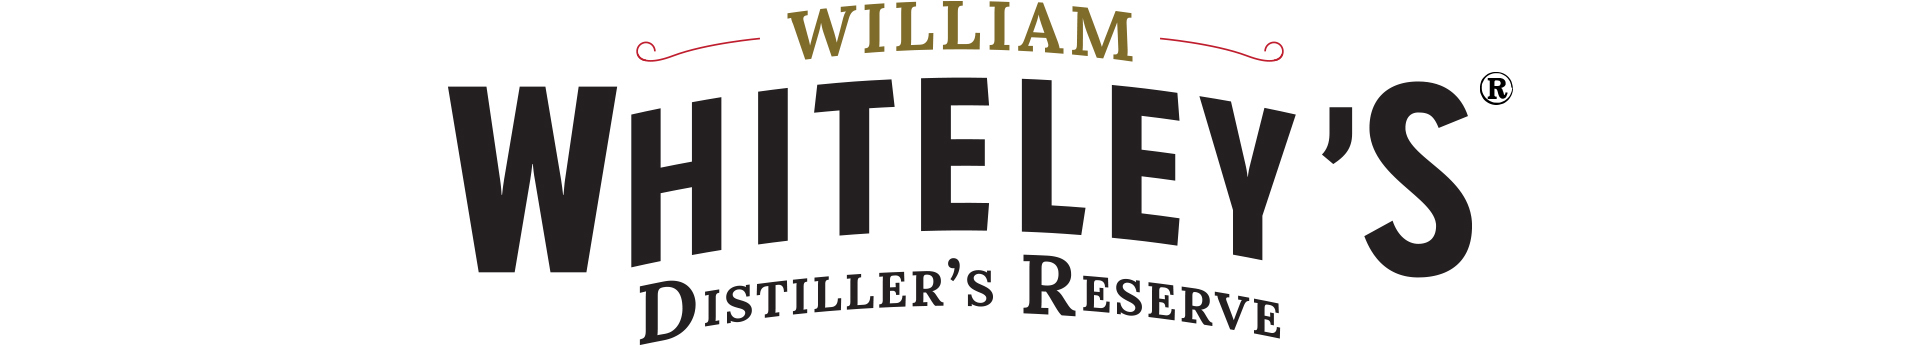 William Whiteley's Blended Scotch Whisky